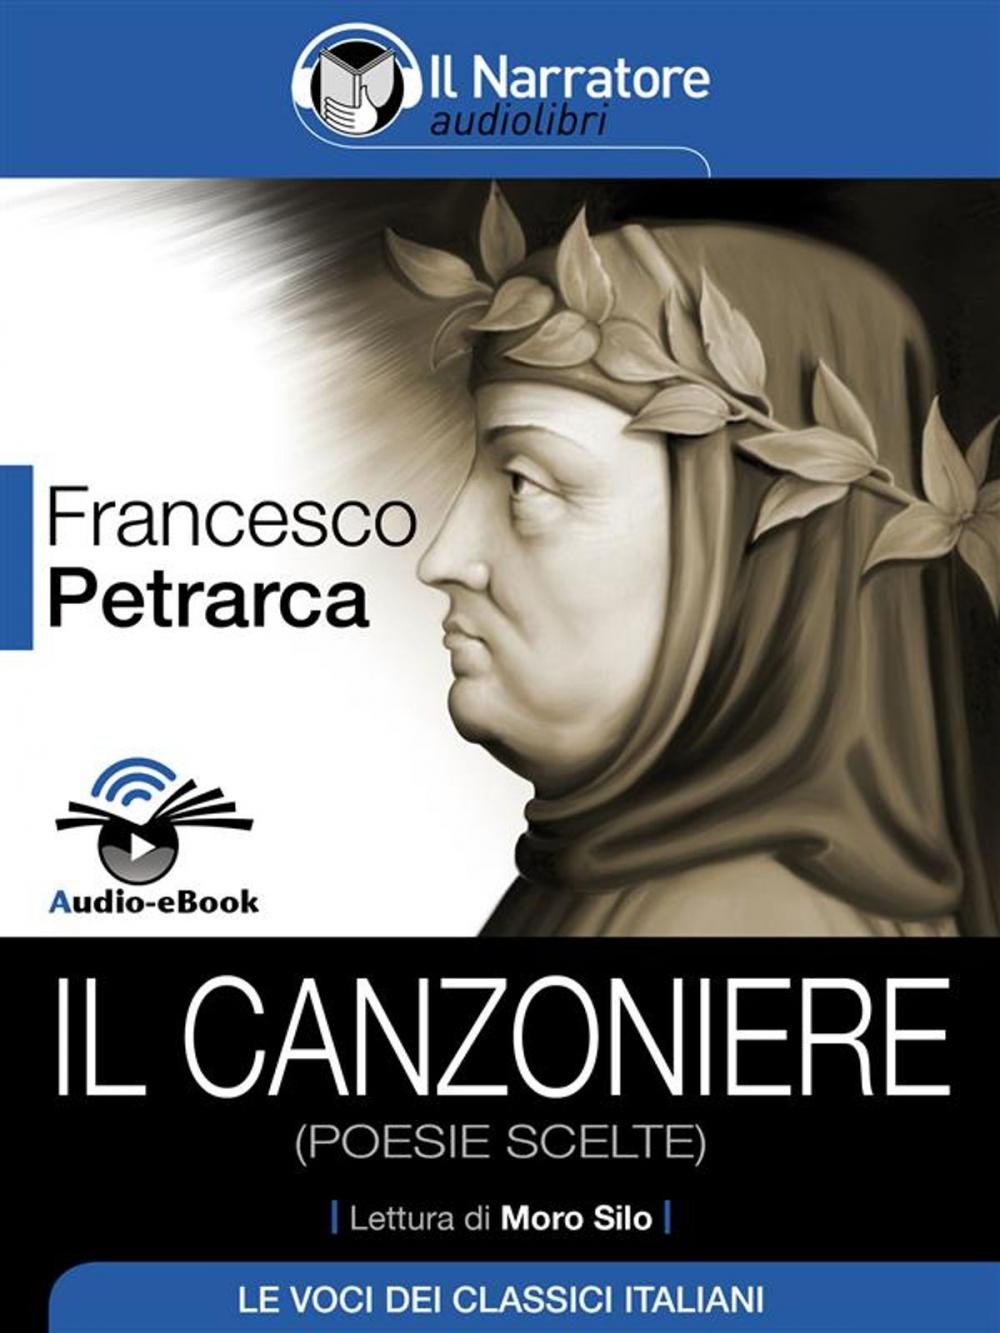 Big bigCover of Il Canzoniere (poesie scelte) (Audio-eBook)